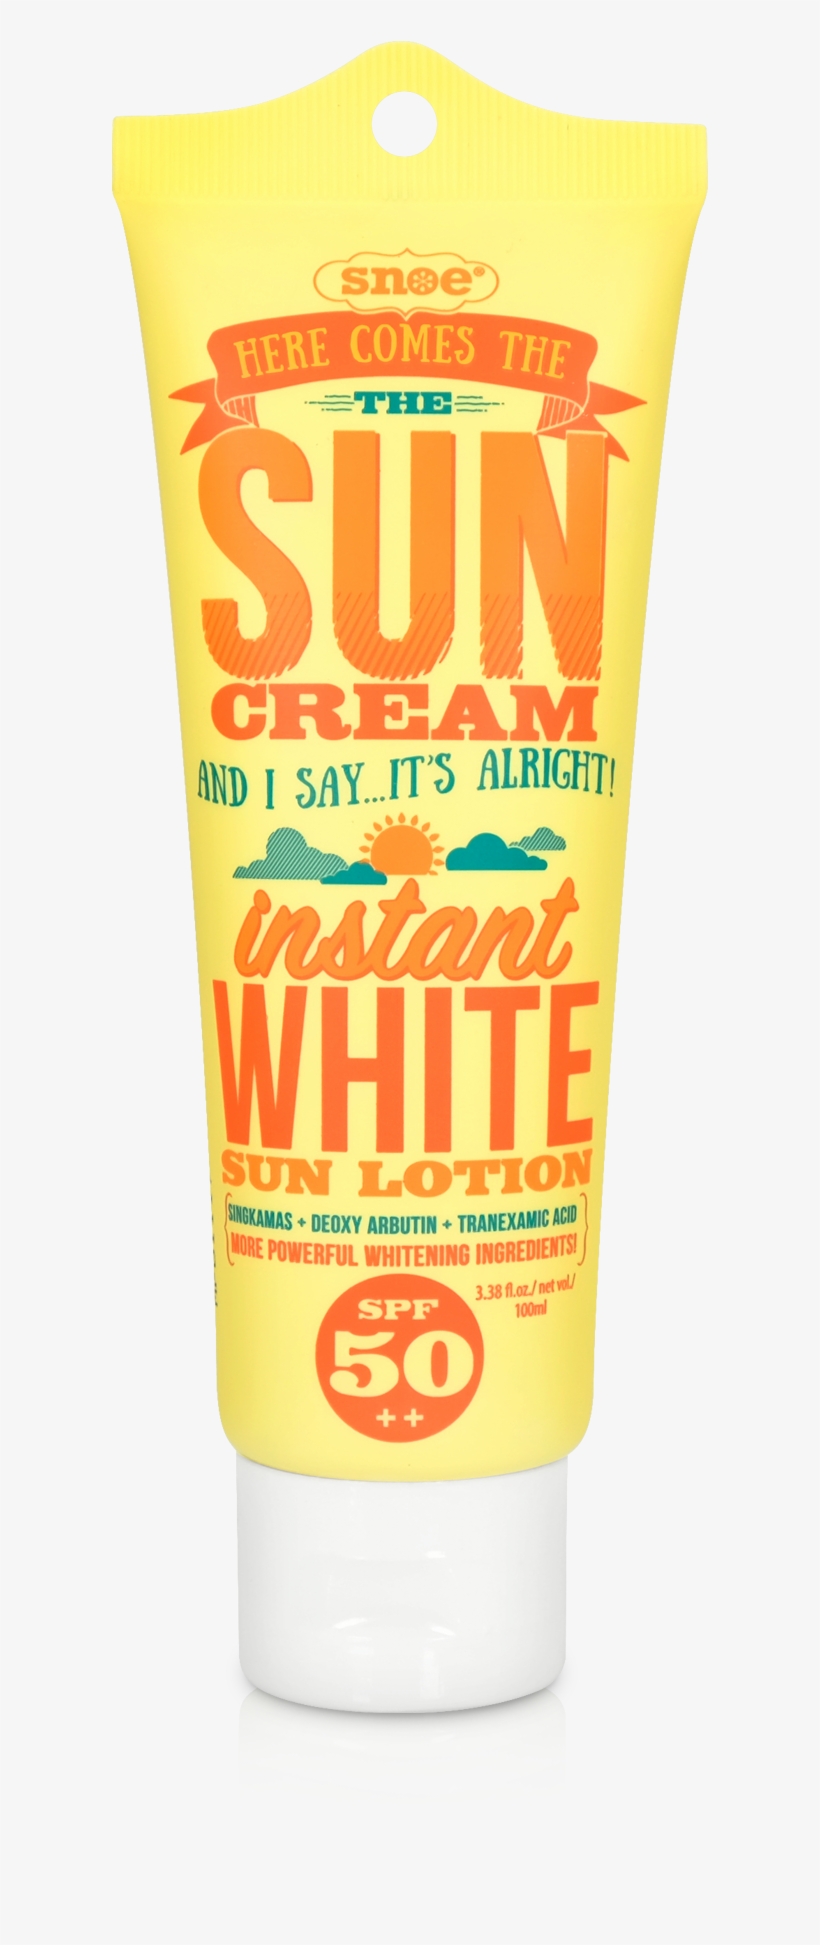 Here Comes The Sun Cream Instant White Sun Lotion Spf50 - Snoe Sunblock, transparent png #2840729